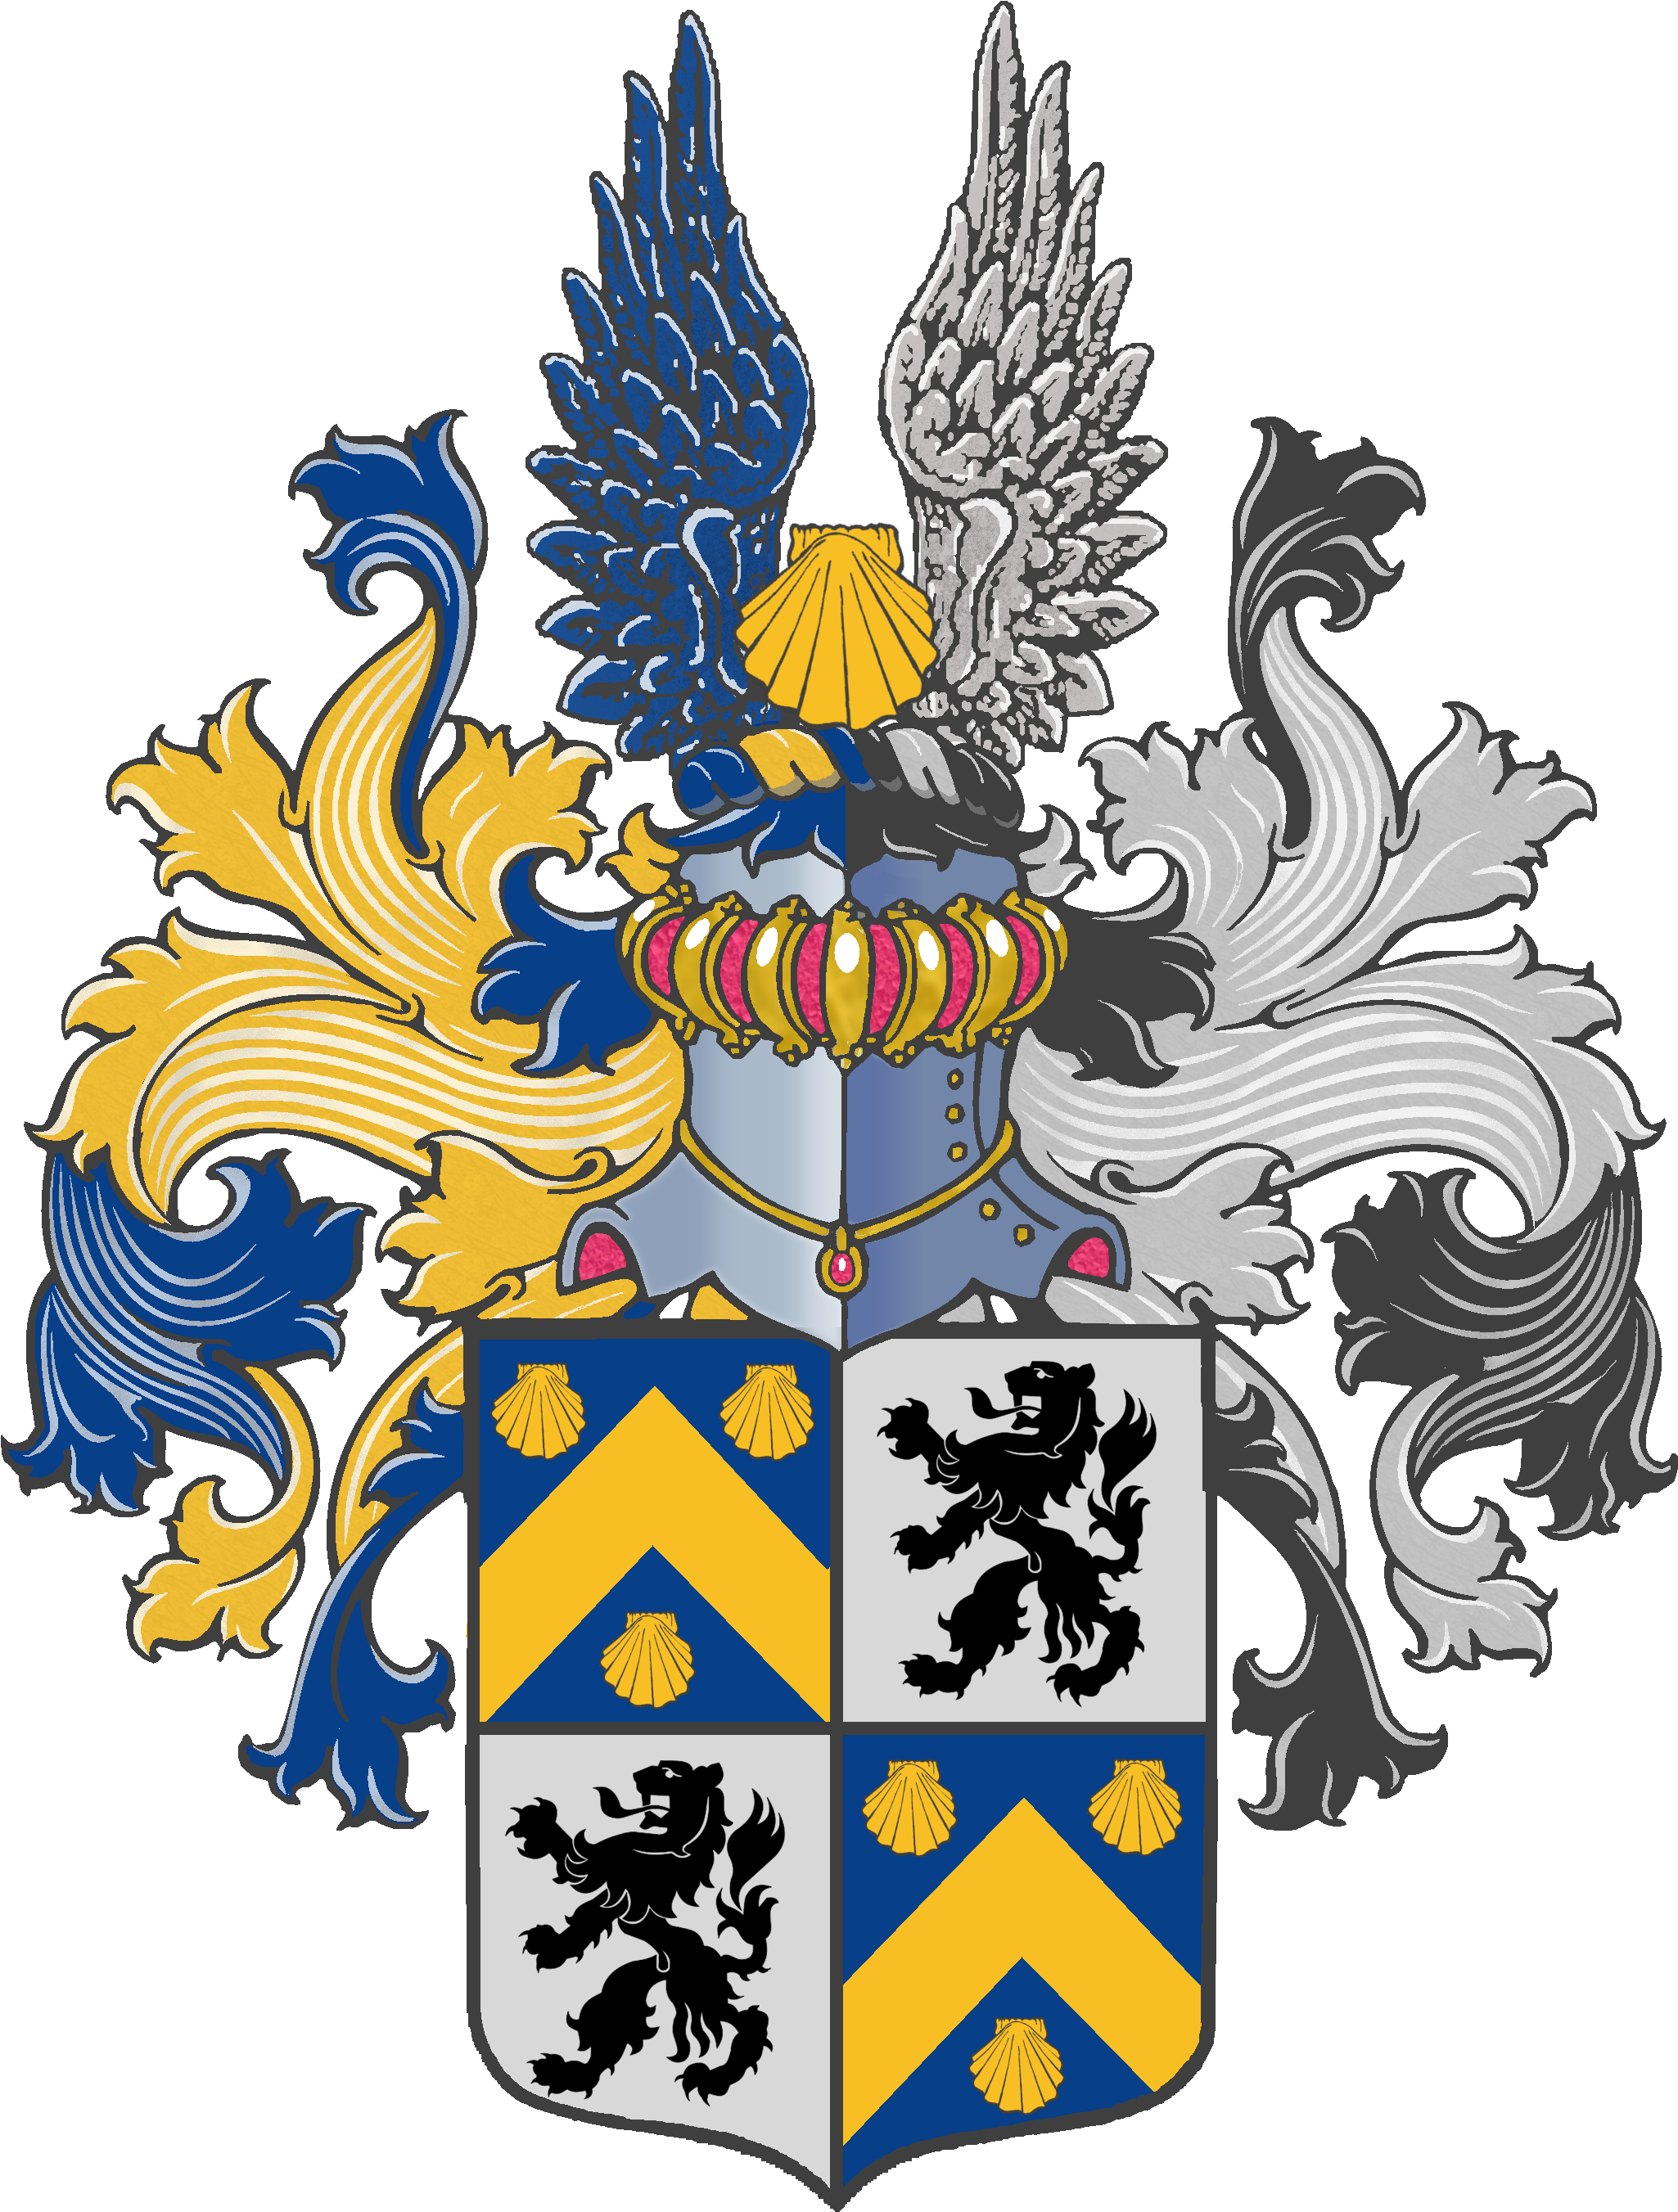 This Is The Full Coat Of Arms Of The Family Van Den - Van Den Berg Family Crest (2160x2776)